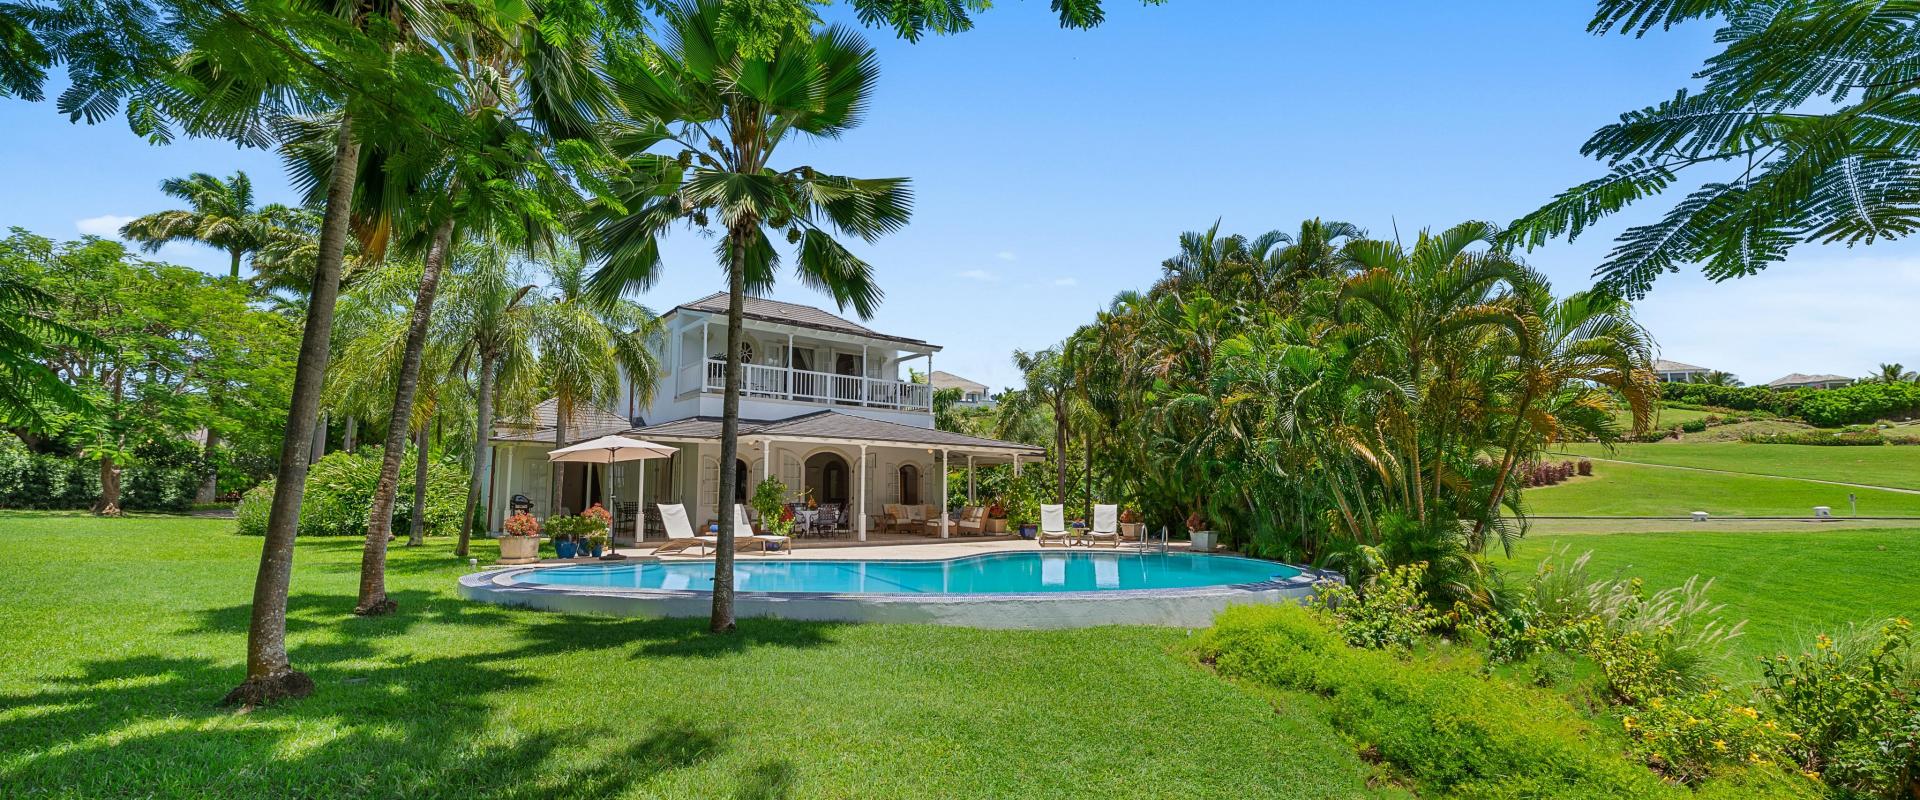 Villa Rosa Holiday Rental Villa In Royal Westmoreland Barbados Garden Shot With Pool Deck and Back Patios